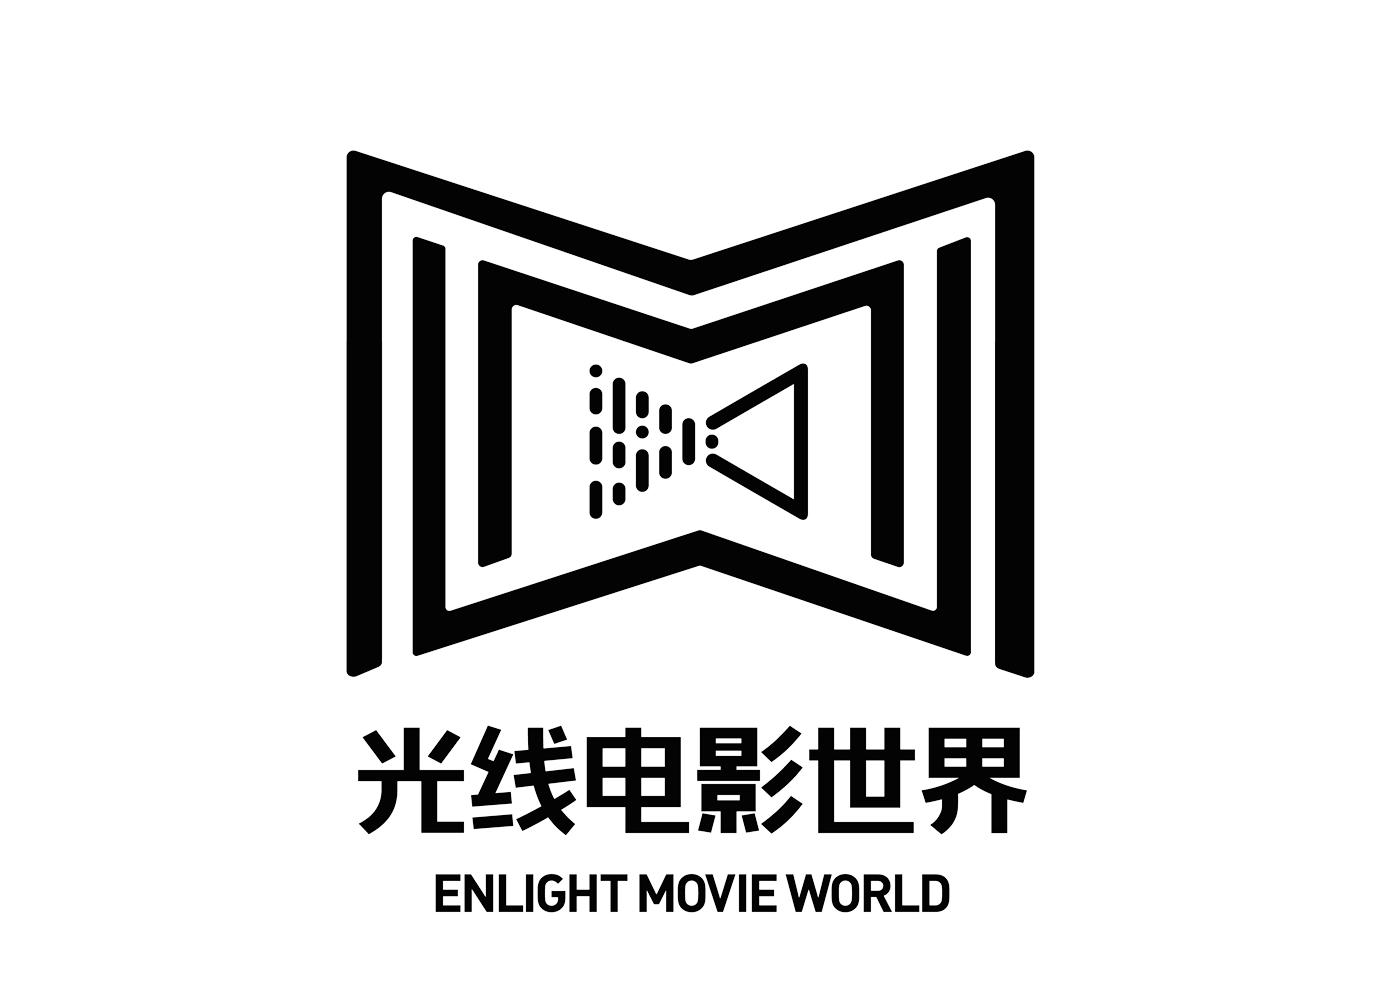 enlight movie world商标注册号 47746196,商标申请人北京光线传媒